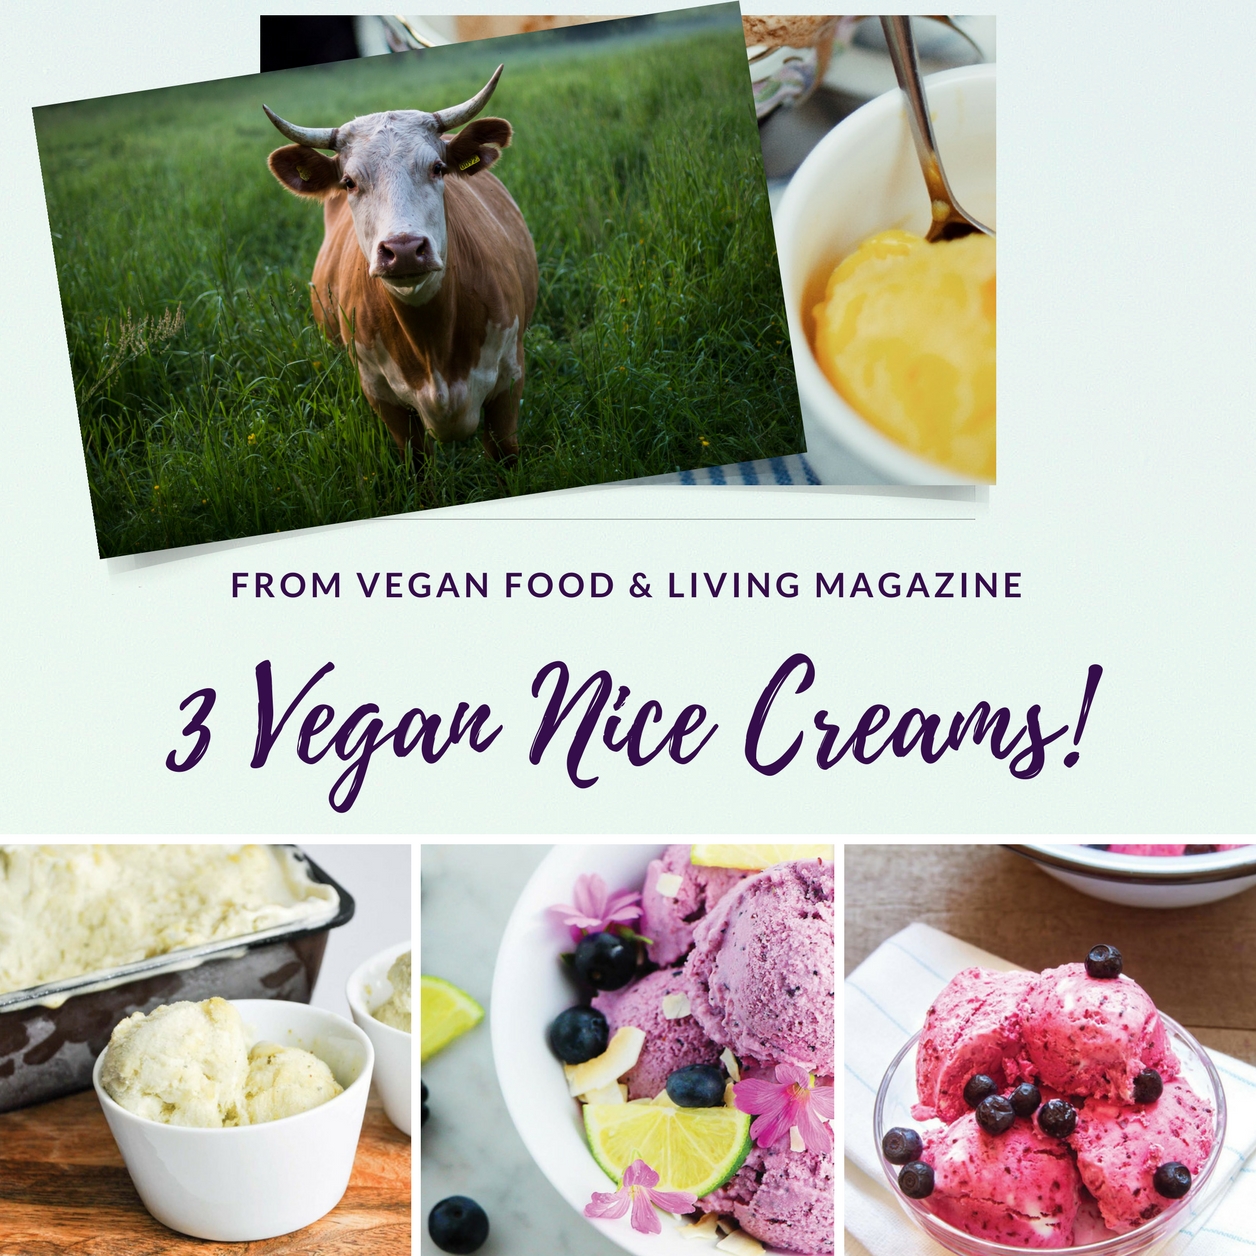  3 Vegan Nice Creams from Vegan Food & Living